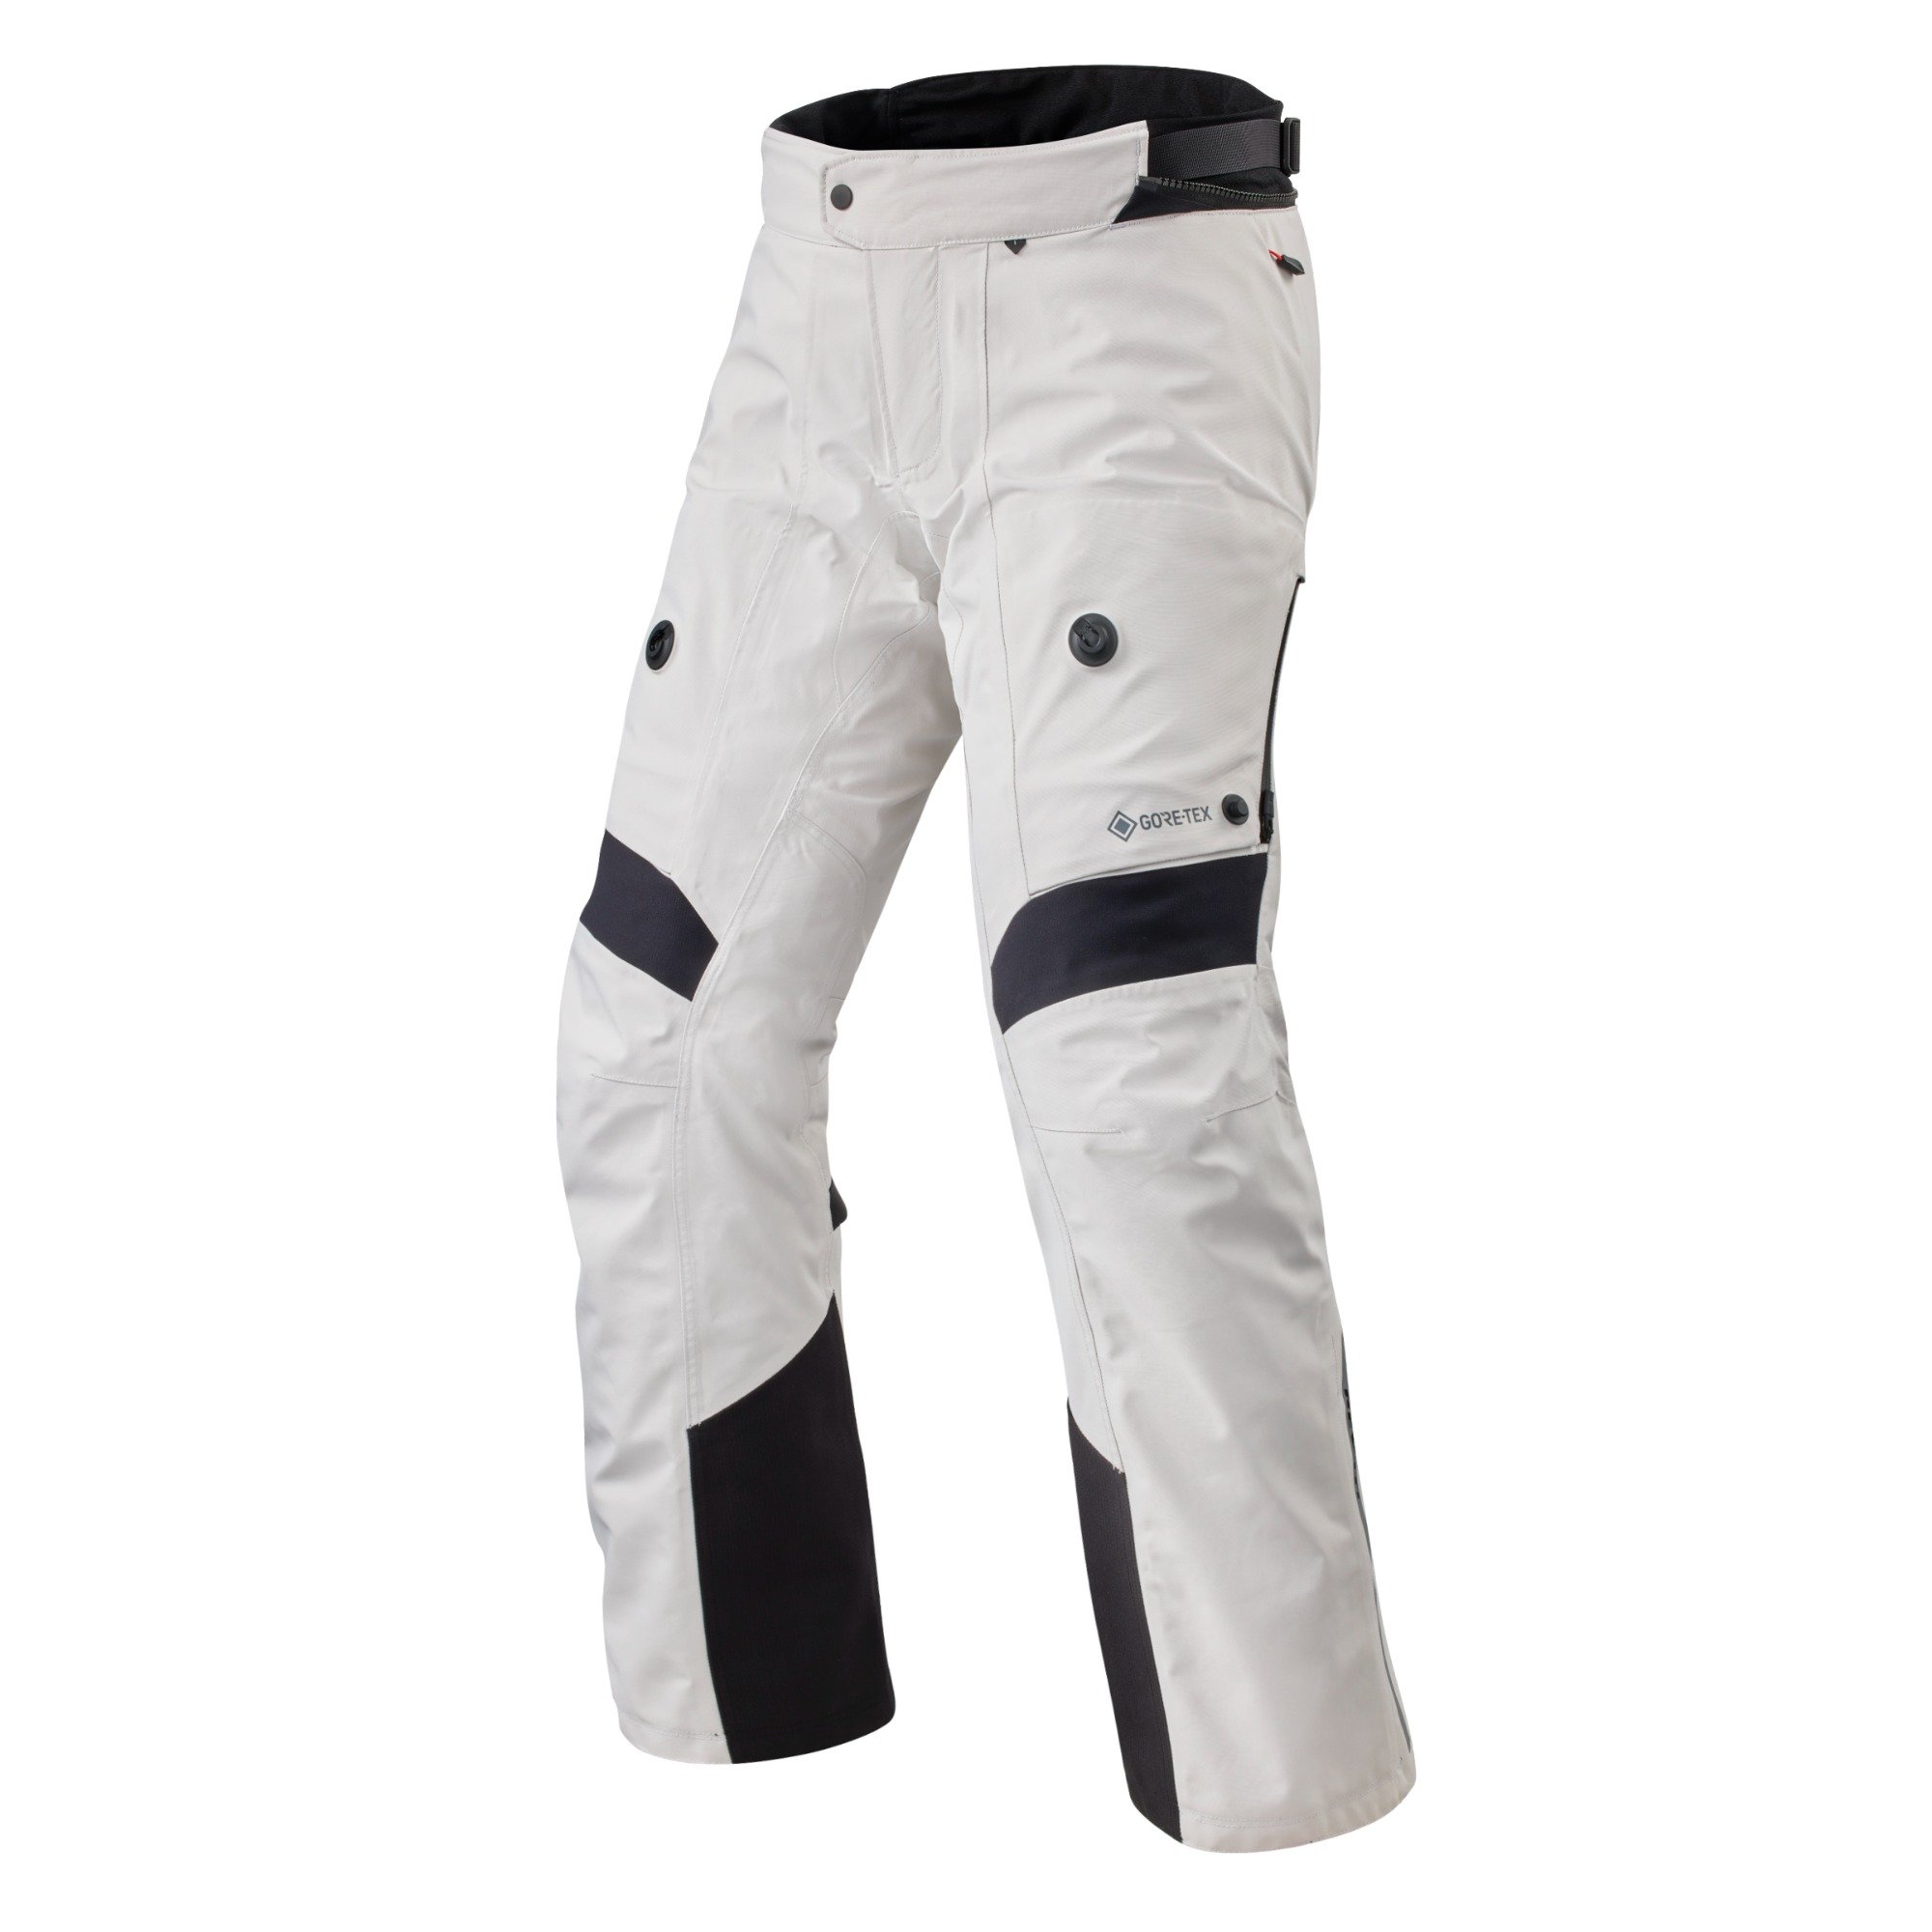 Image of REV'IT! Pants Poseidon 3 GTX Silver Black Short Motorcycle Pants Size L EN